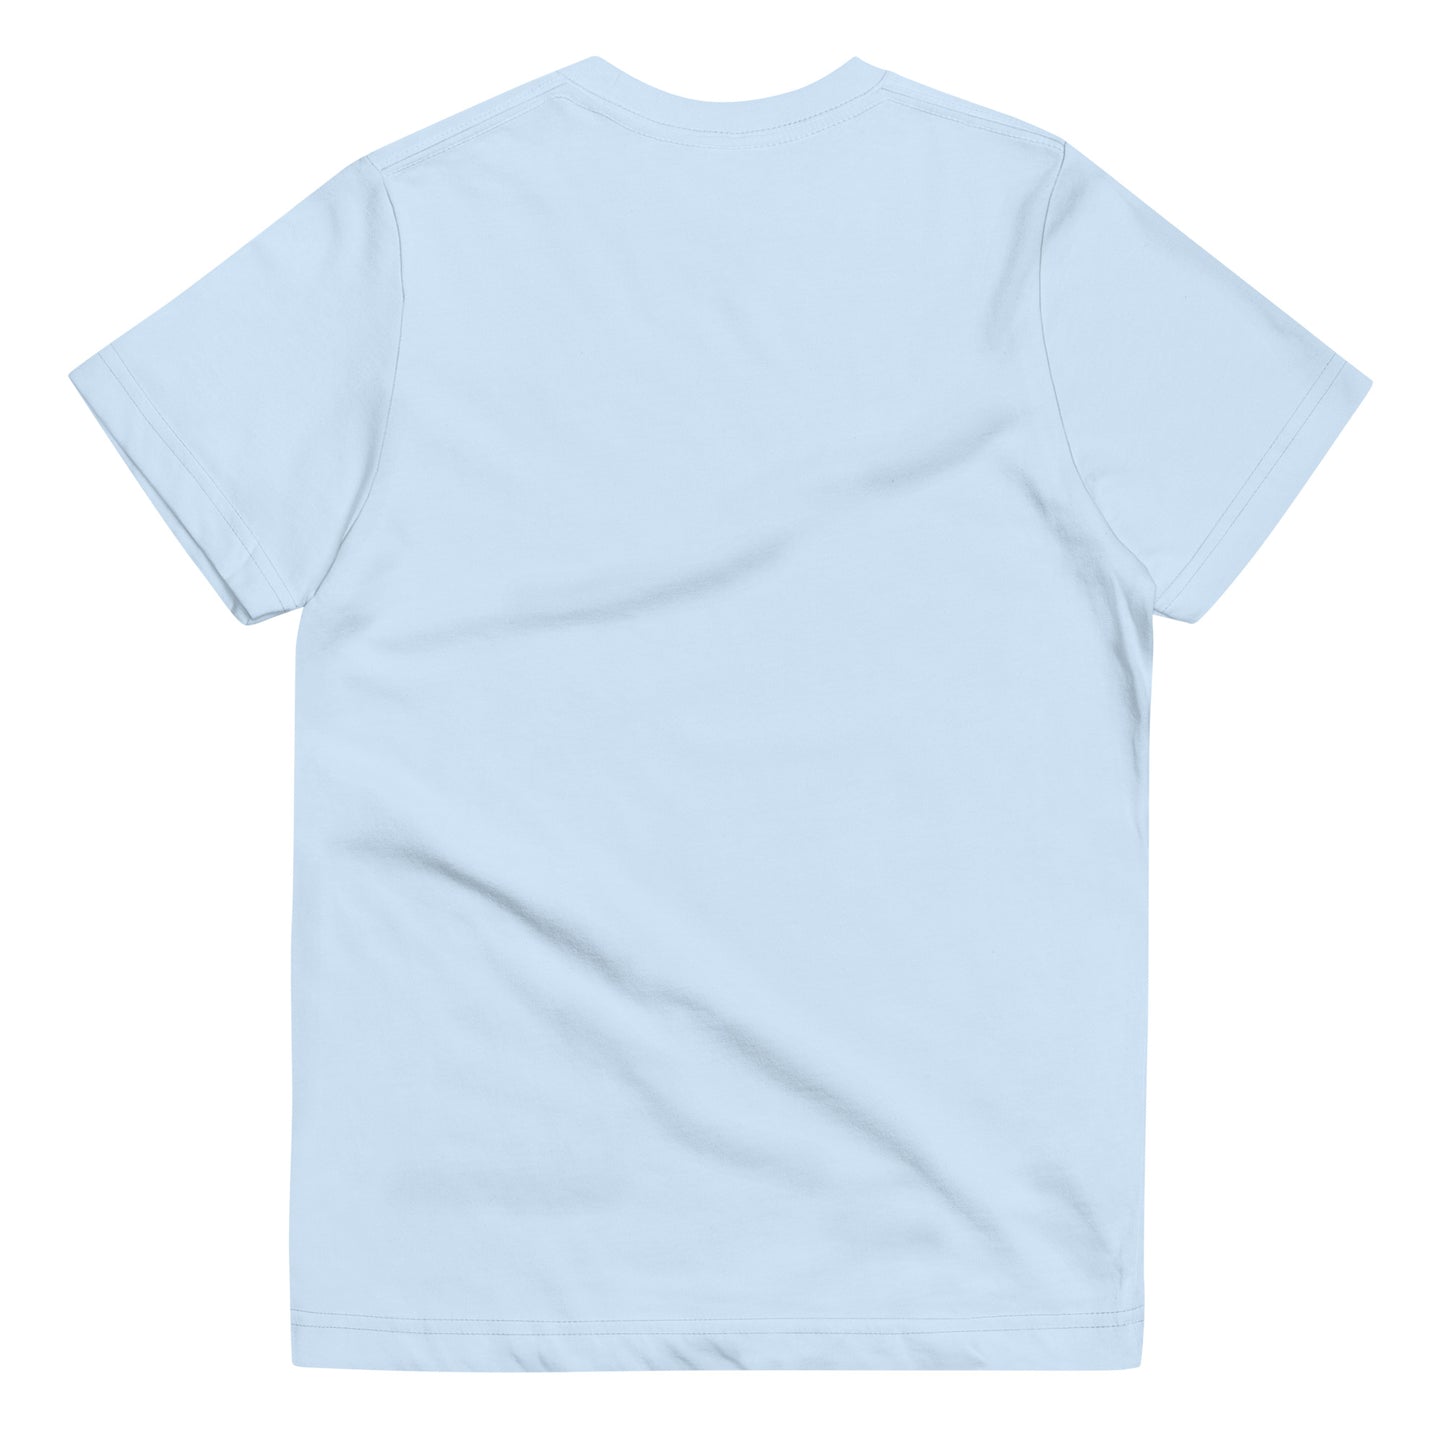  Kids T-Shirt - Light Blue - Back flat lay view - Go Sea Kayak Byron Bay Crew (issue 2018-2019) logo on front - Genuine Byron Bay Merchandise | Produced by Go Sea Kayak Byron Bay 